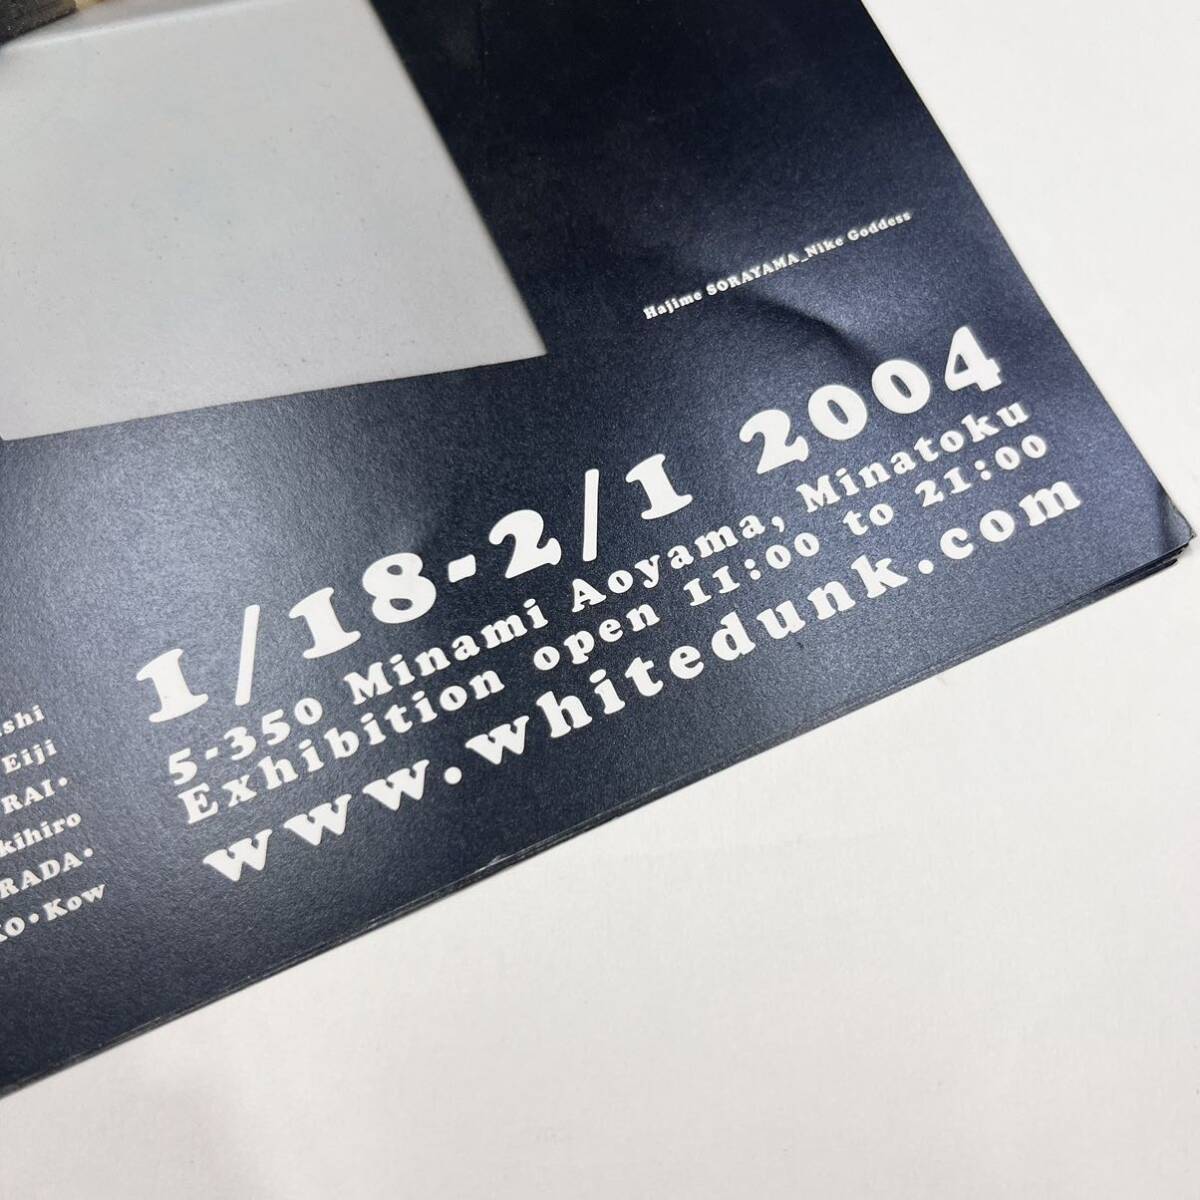 2004 NIKE(ナイキ) WHITE DUNK Evolution of an Icon (ホワイトダンク展) 非売品ポスター&ダンク柄シューレース 藤井ヒロシ